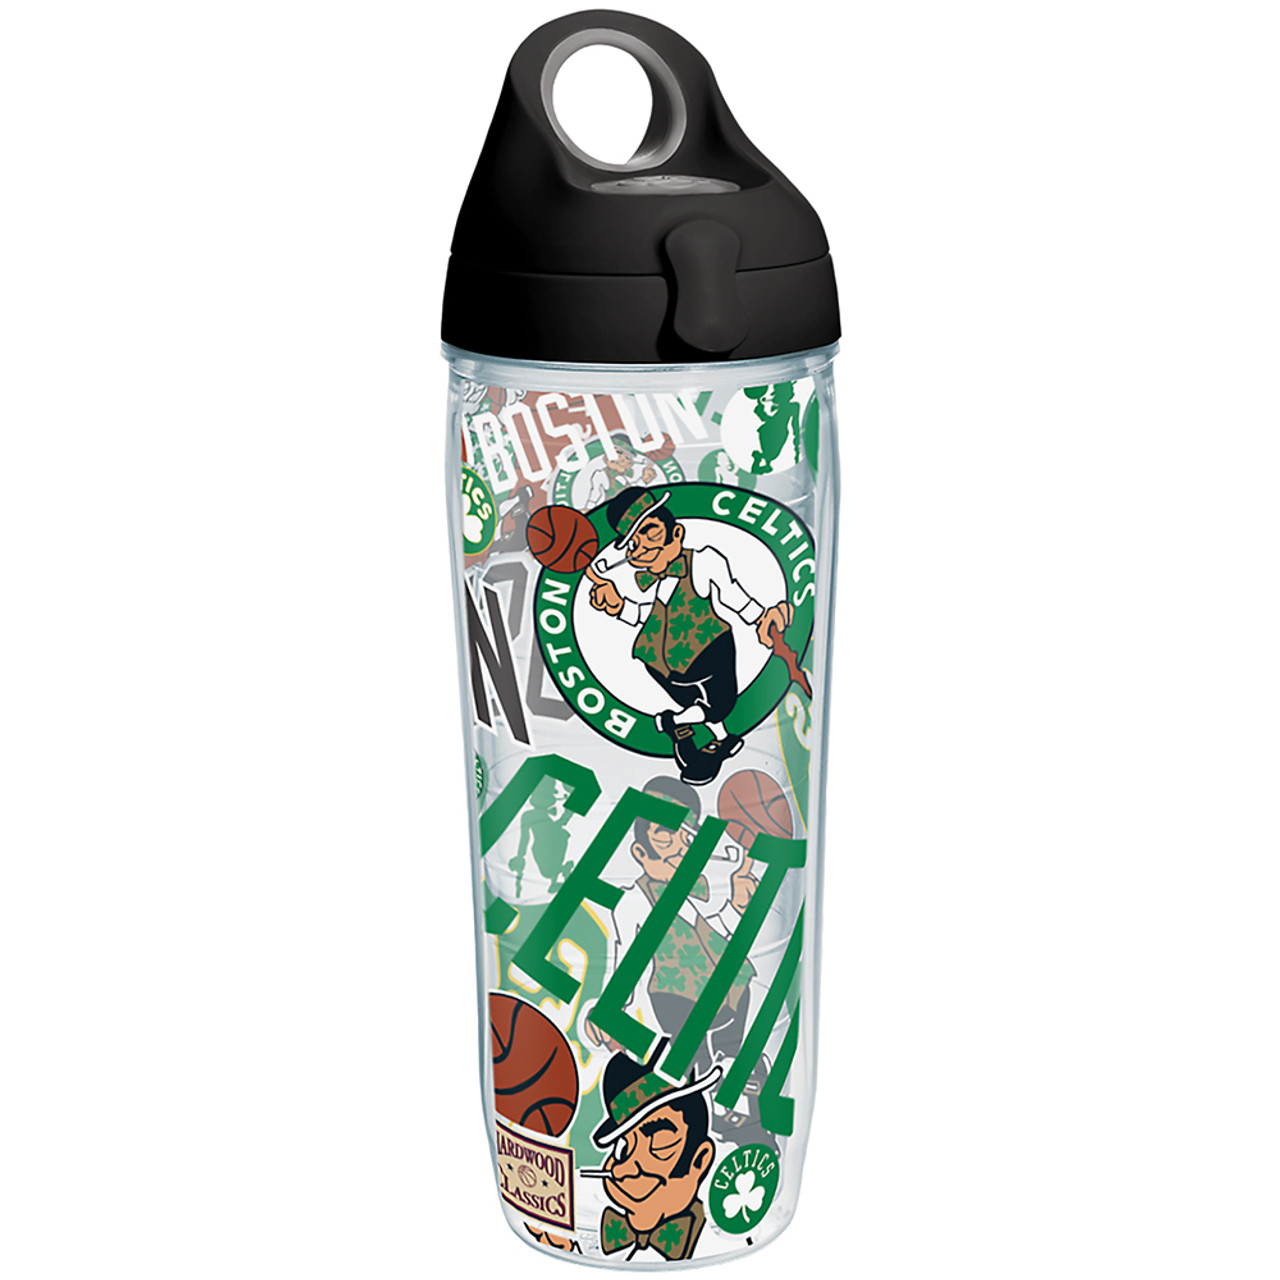 Celtics 17th Title Water Bottle - Boston Celtics History